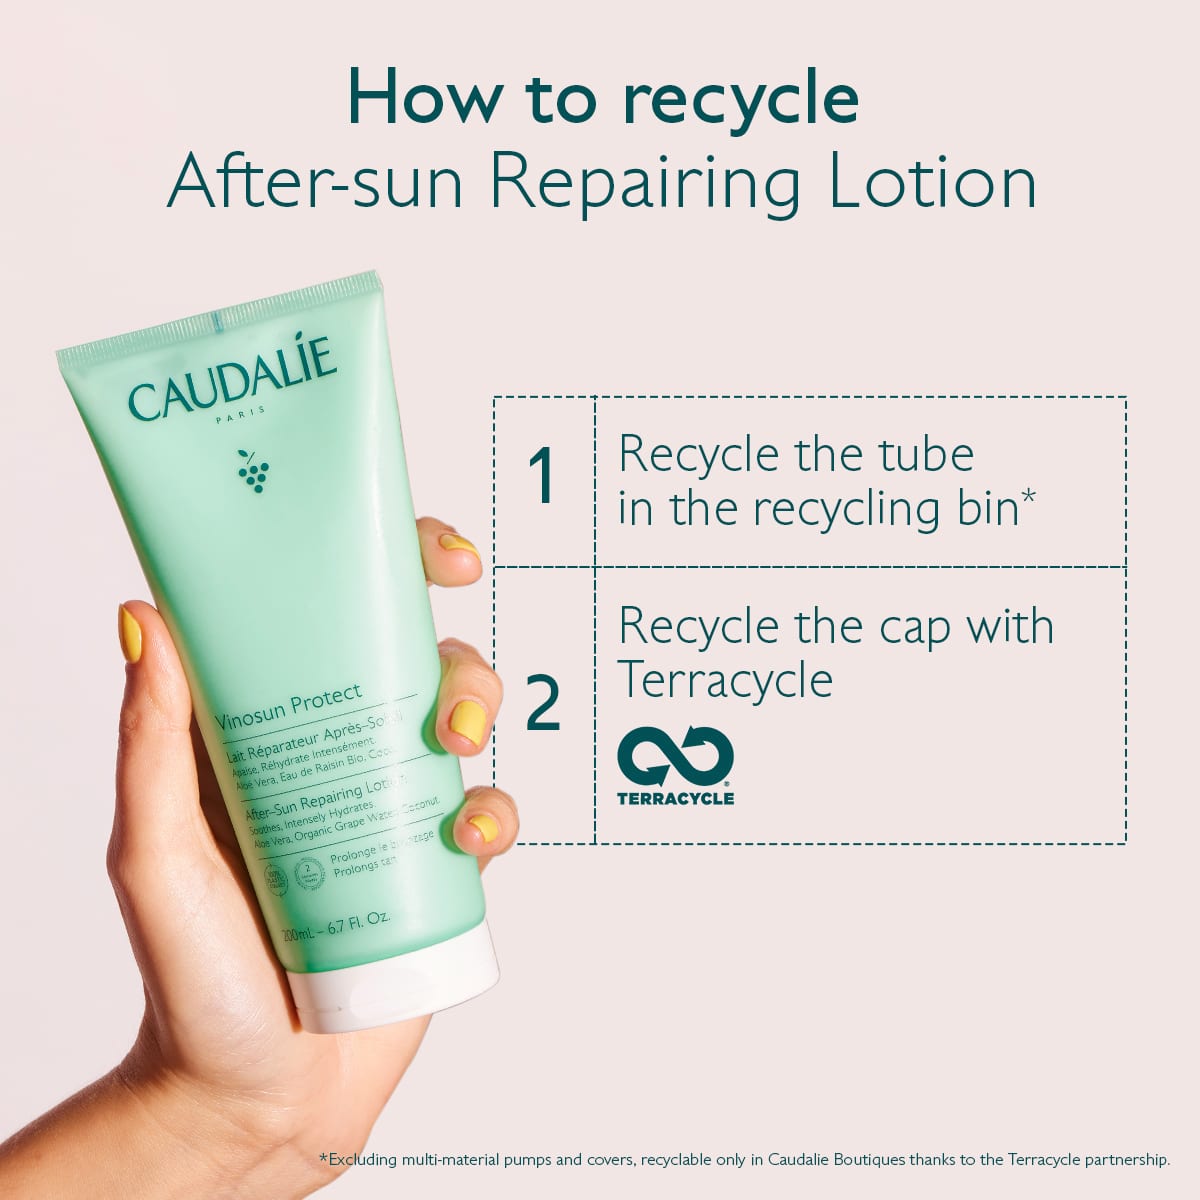 caudalie-vinosun-protect-after-sun-repairing-lotion-200ml-mamaspharmacy-6